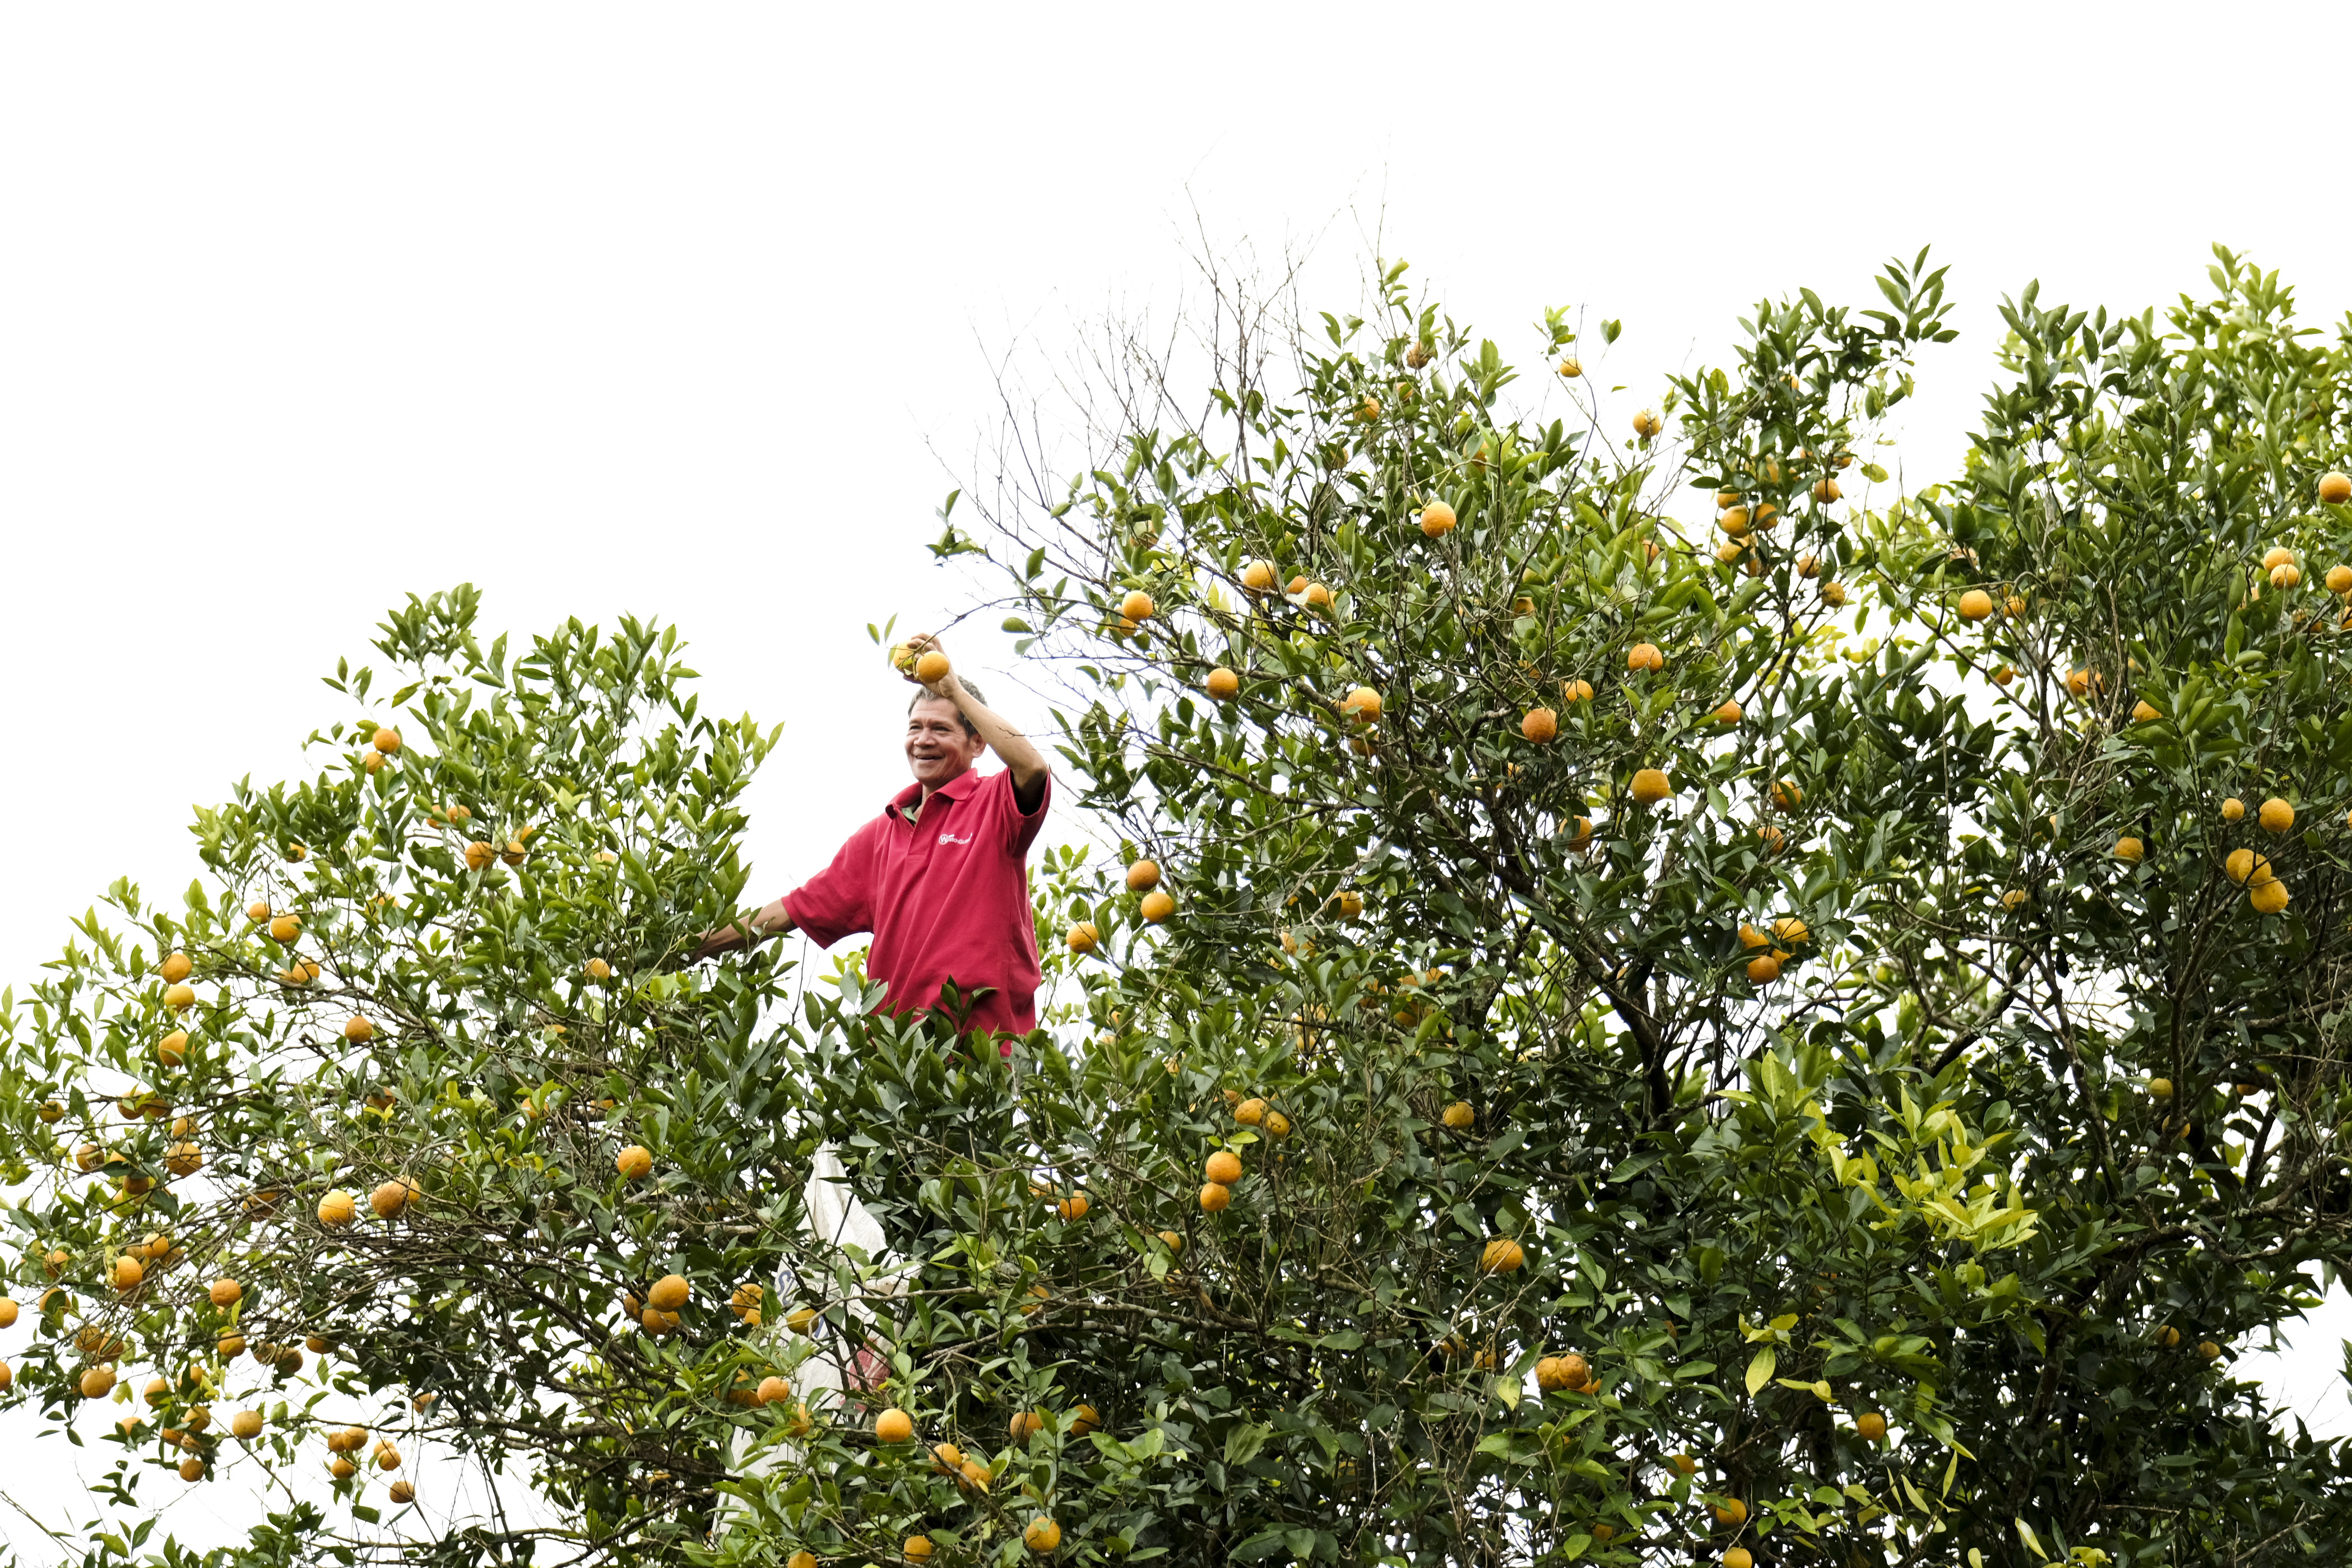 Mountain oranges enter harvest season in central Vietnam